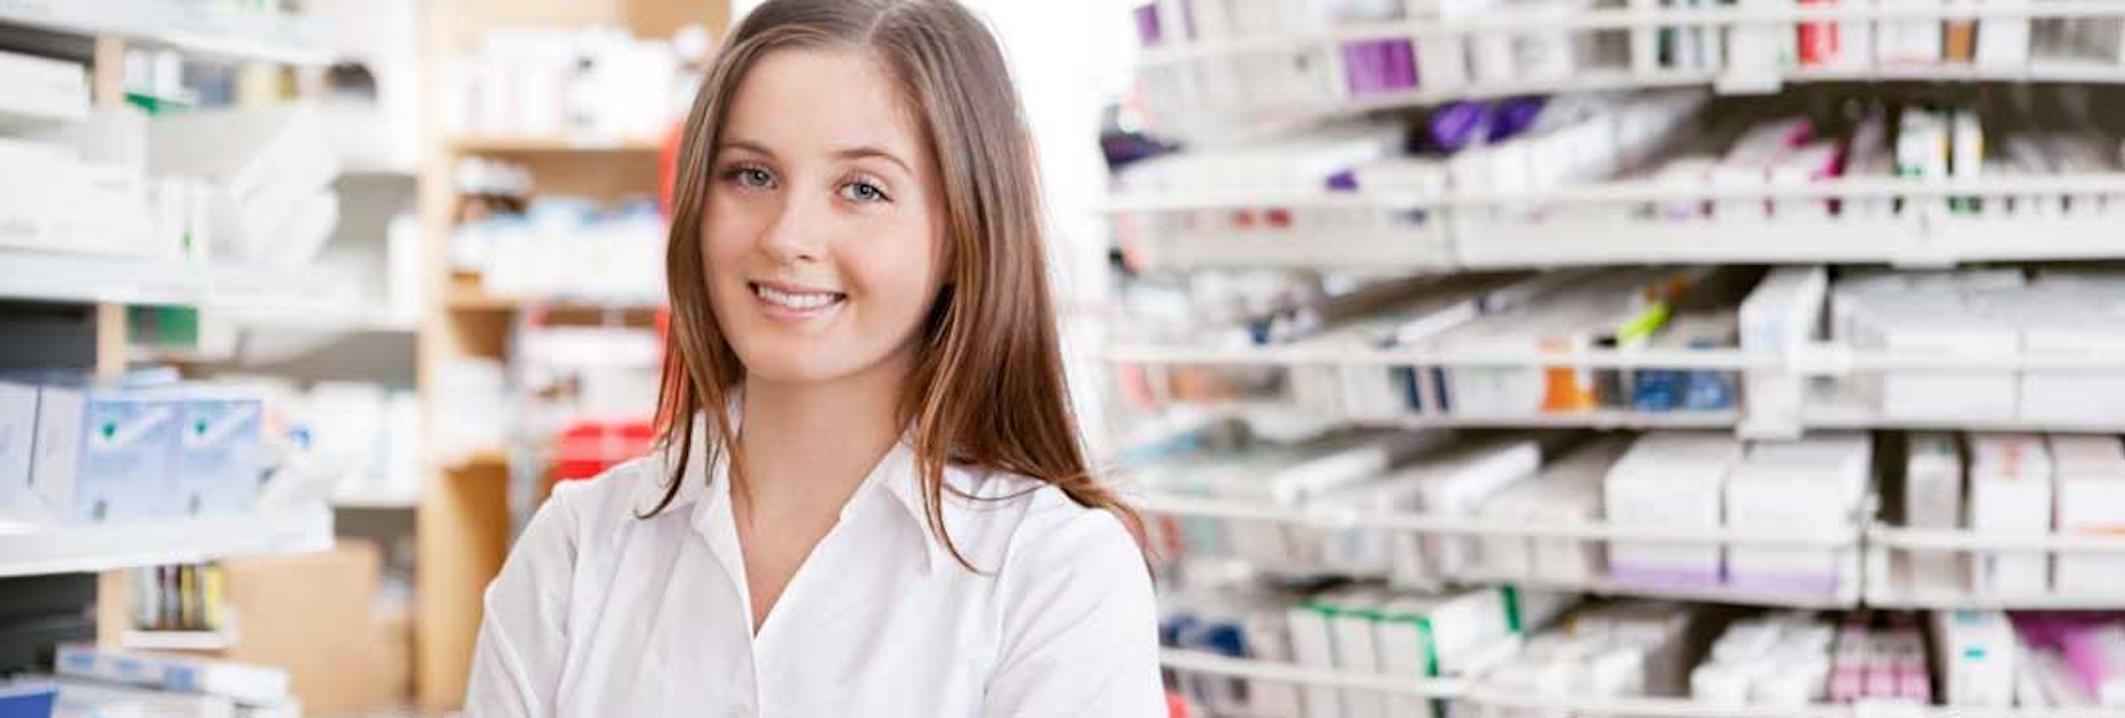 Student in pharmacy